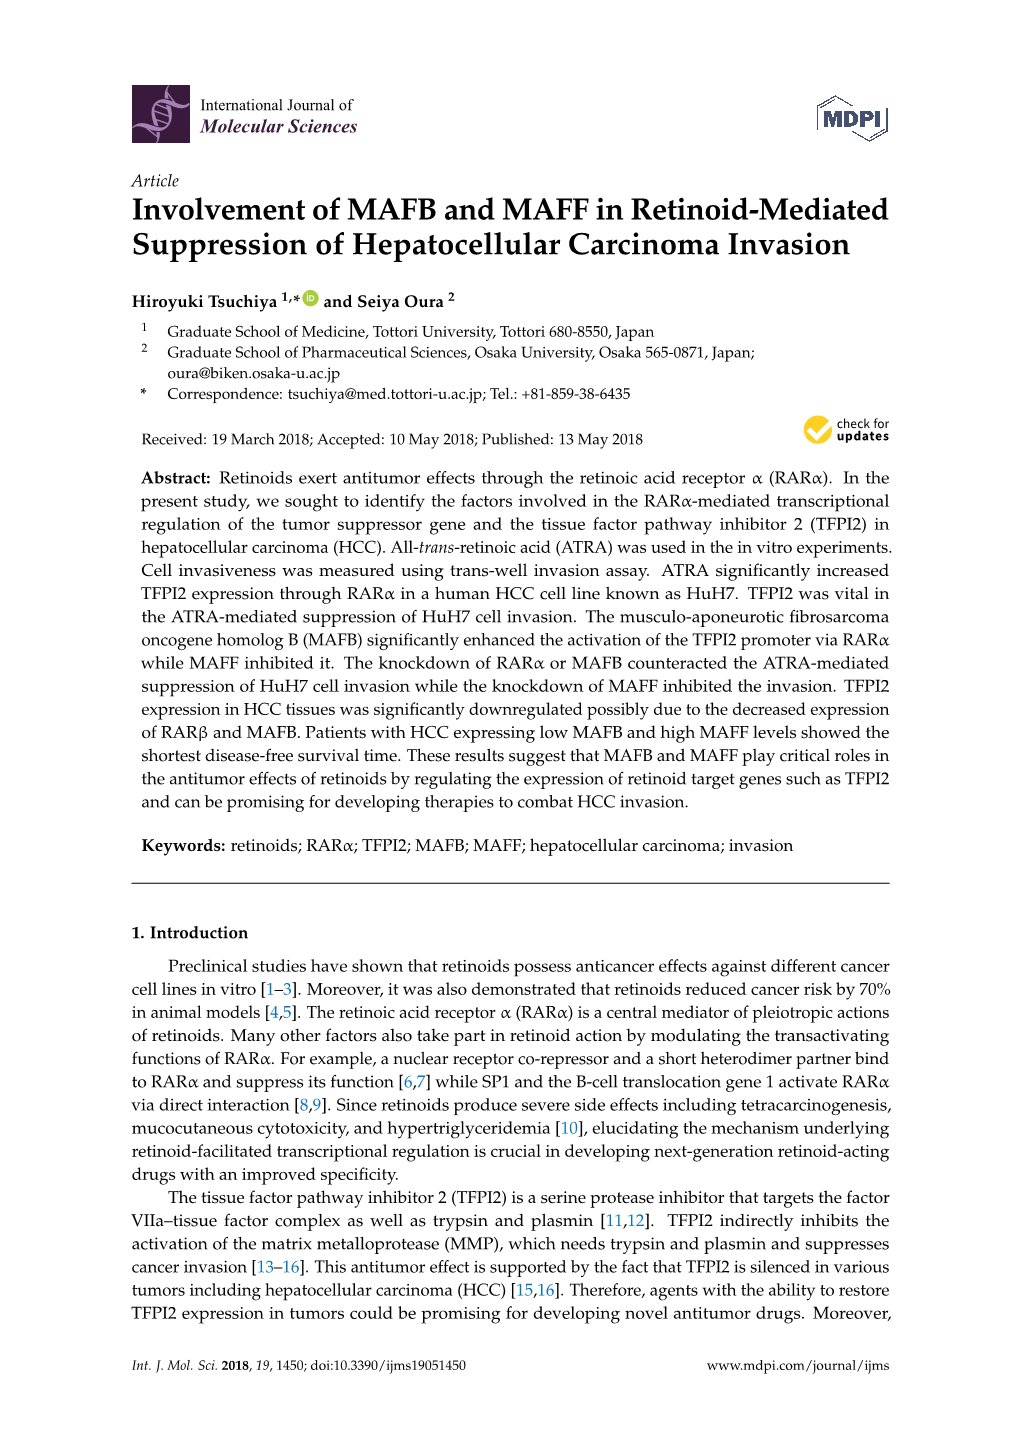 Involvement of MAFB and MAFF in Retinoid-Mediated Suppression of Hepatocellular Carcinoma Invasion